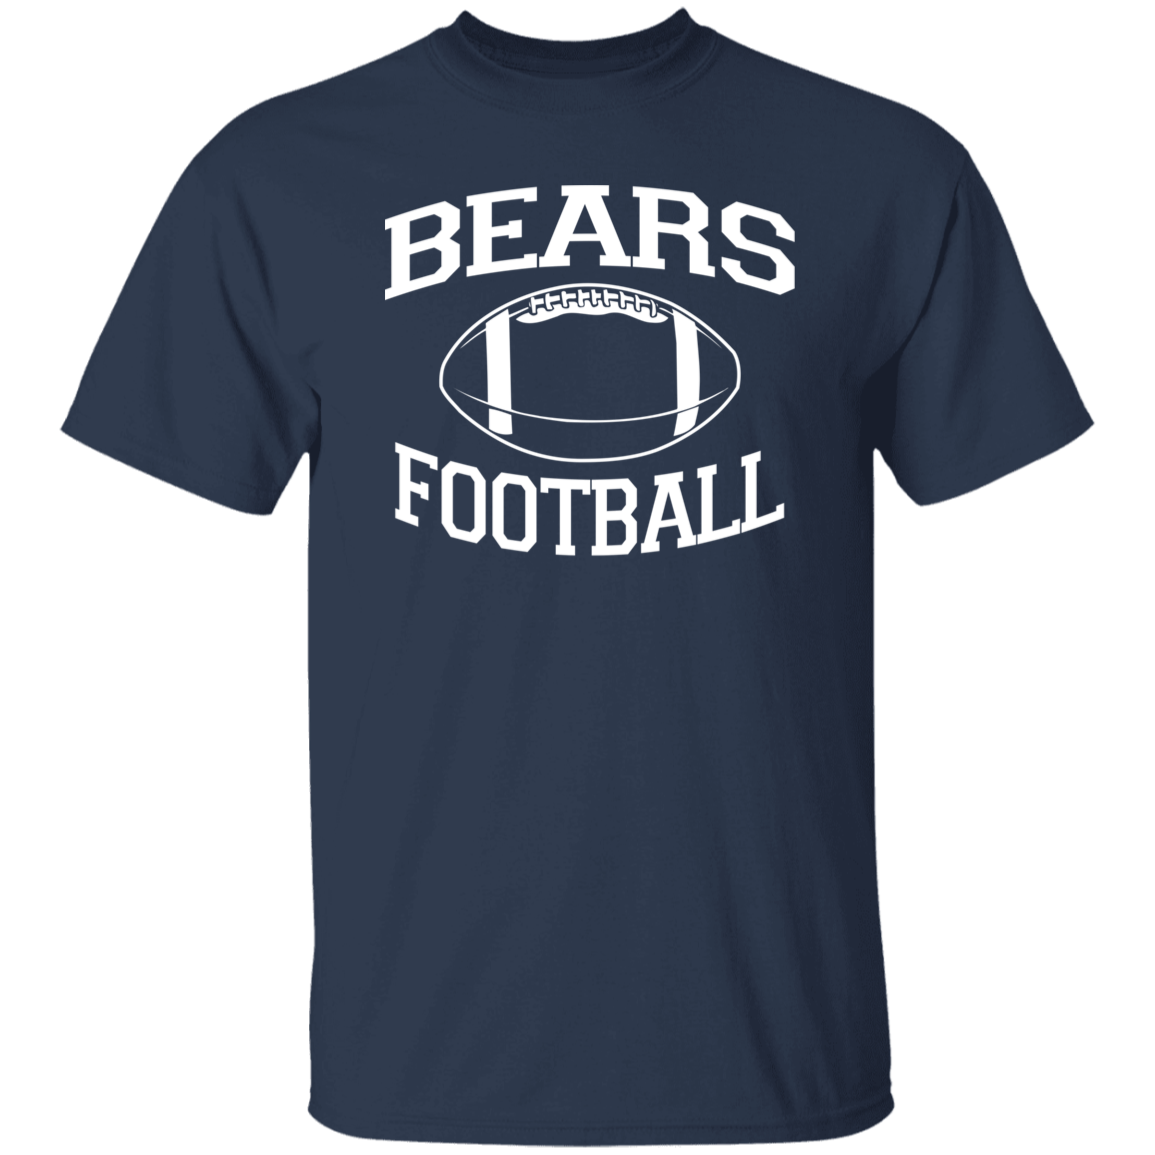 Bears Football White Print T-Shirt